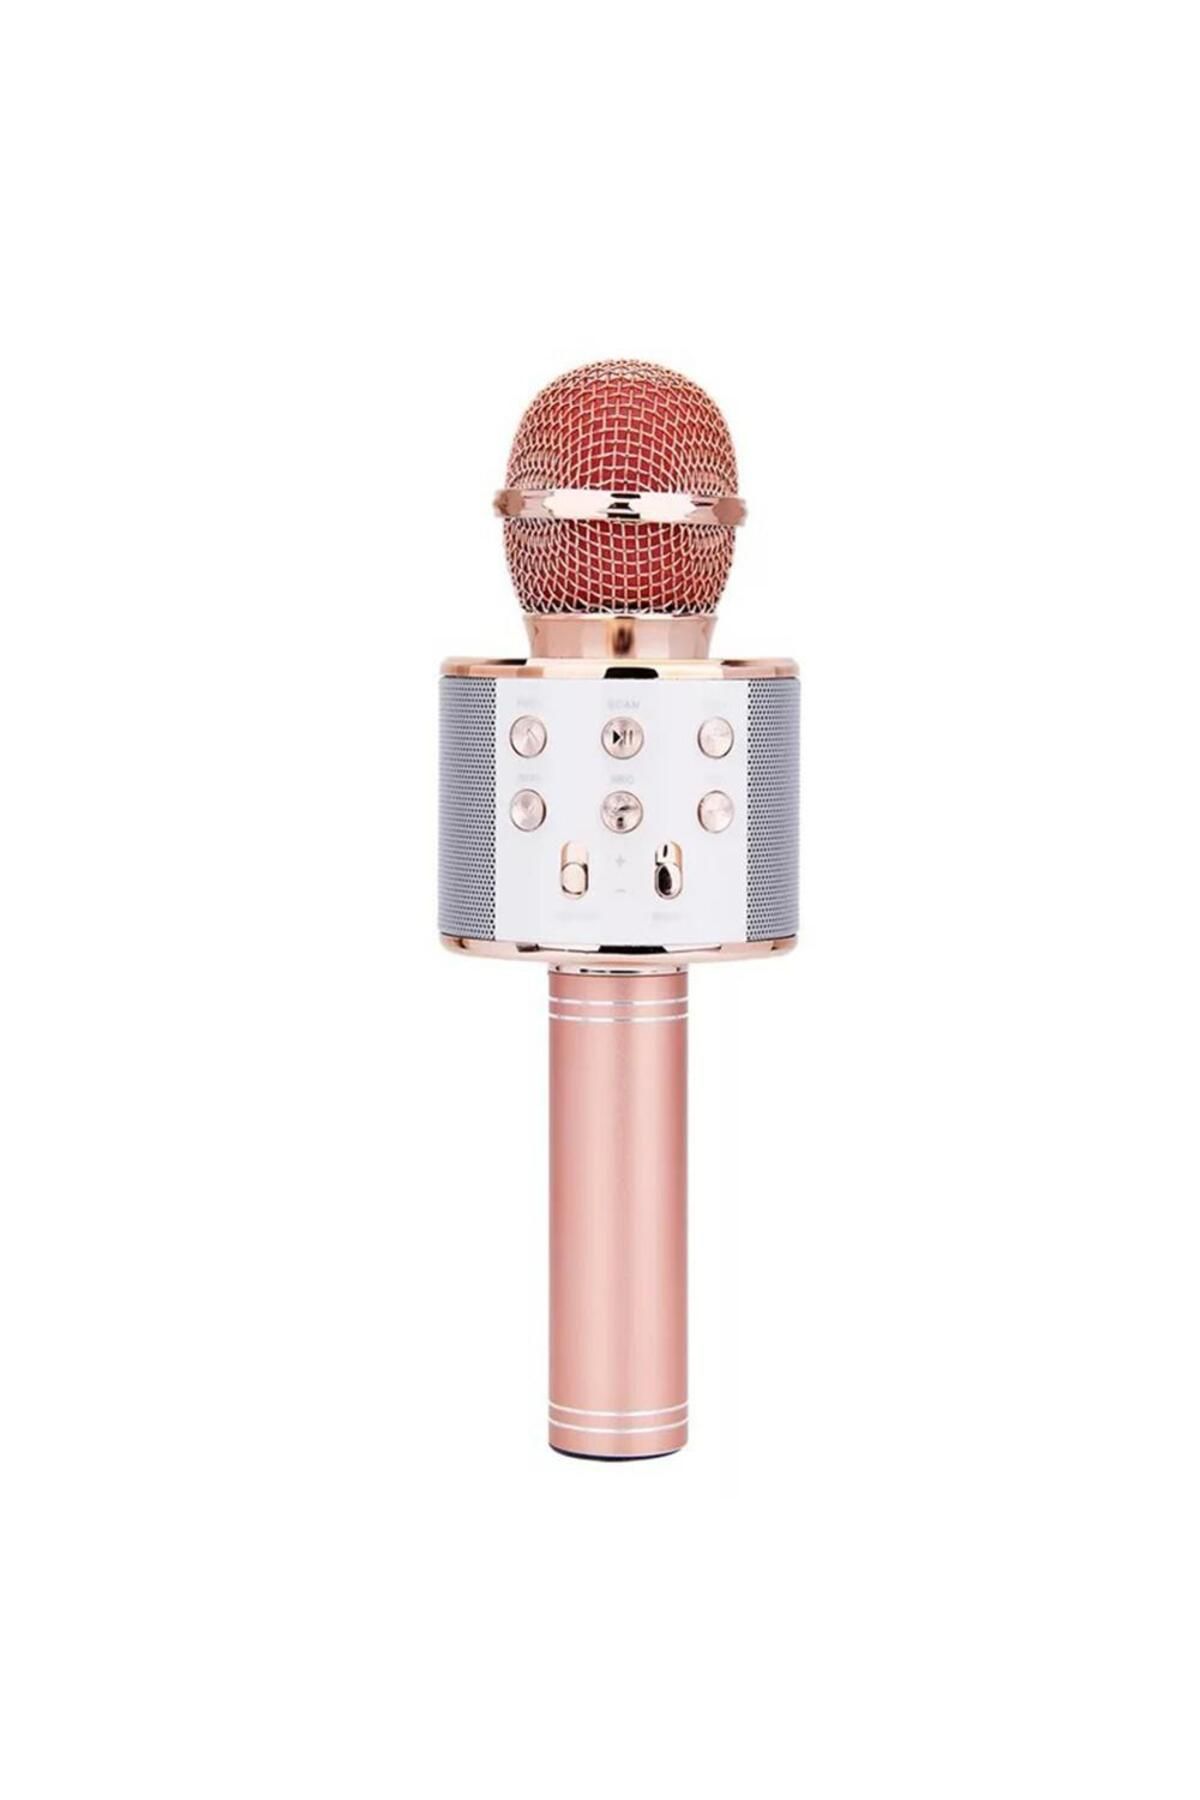 Torima WS-858 Karaoke Mikrofon Aux Usb Ve Sd Kart Girişli Bluetooth Hoparlör Rose Gold